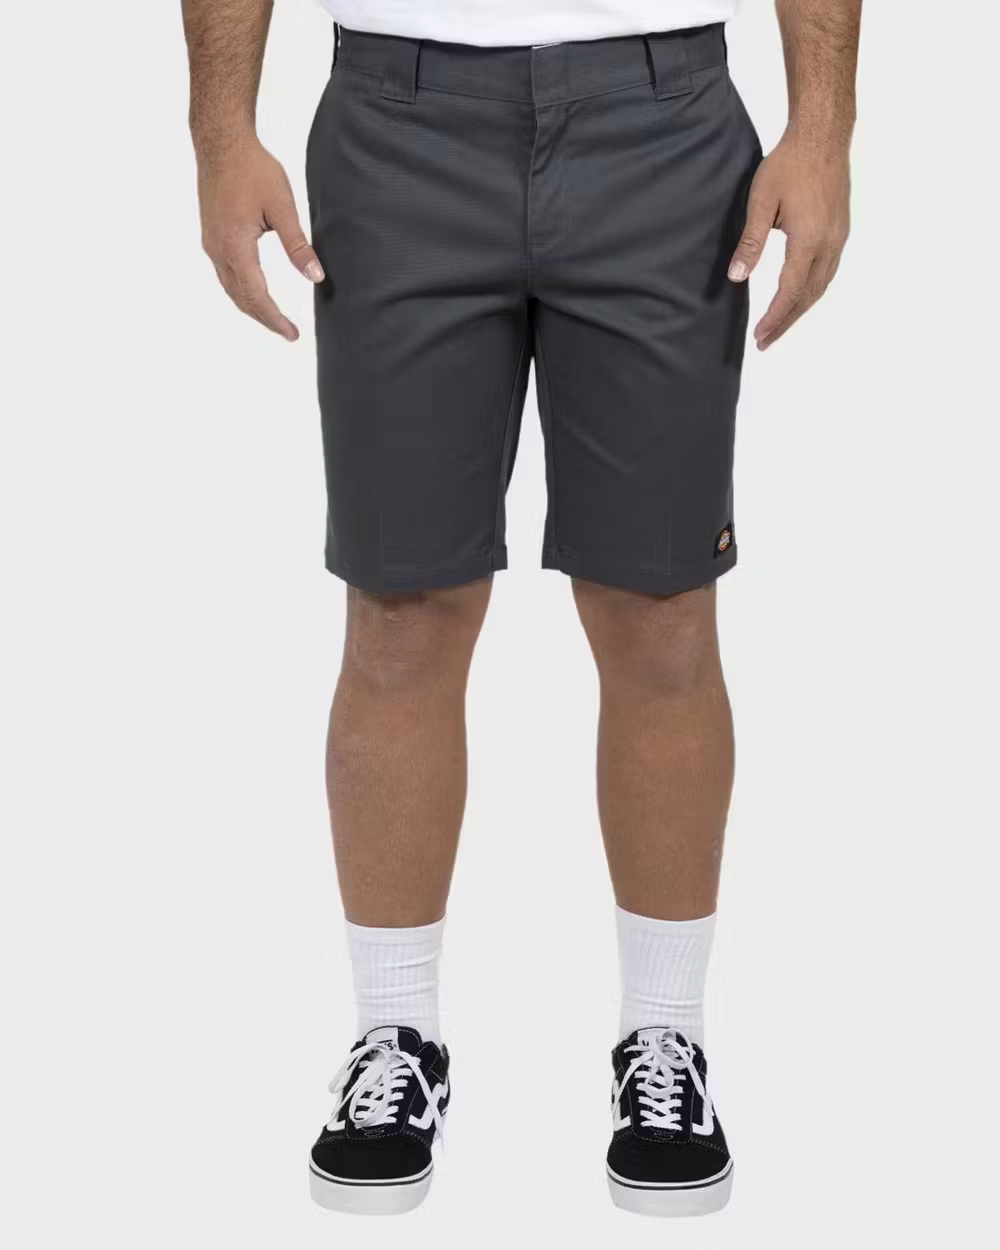 DICKIES 872 Slim Fit Shorts - Charcoal - VENUE.